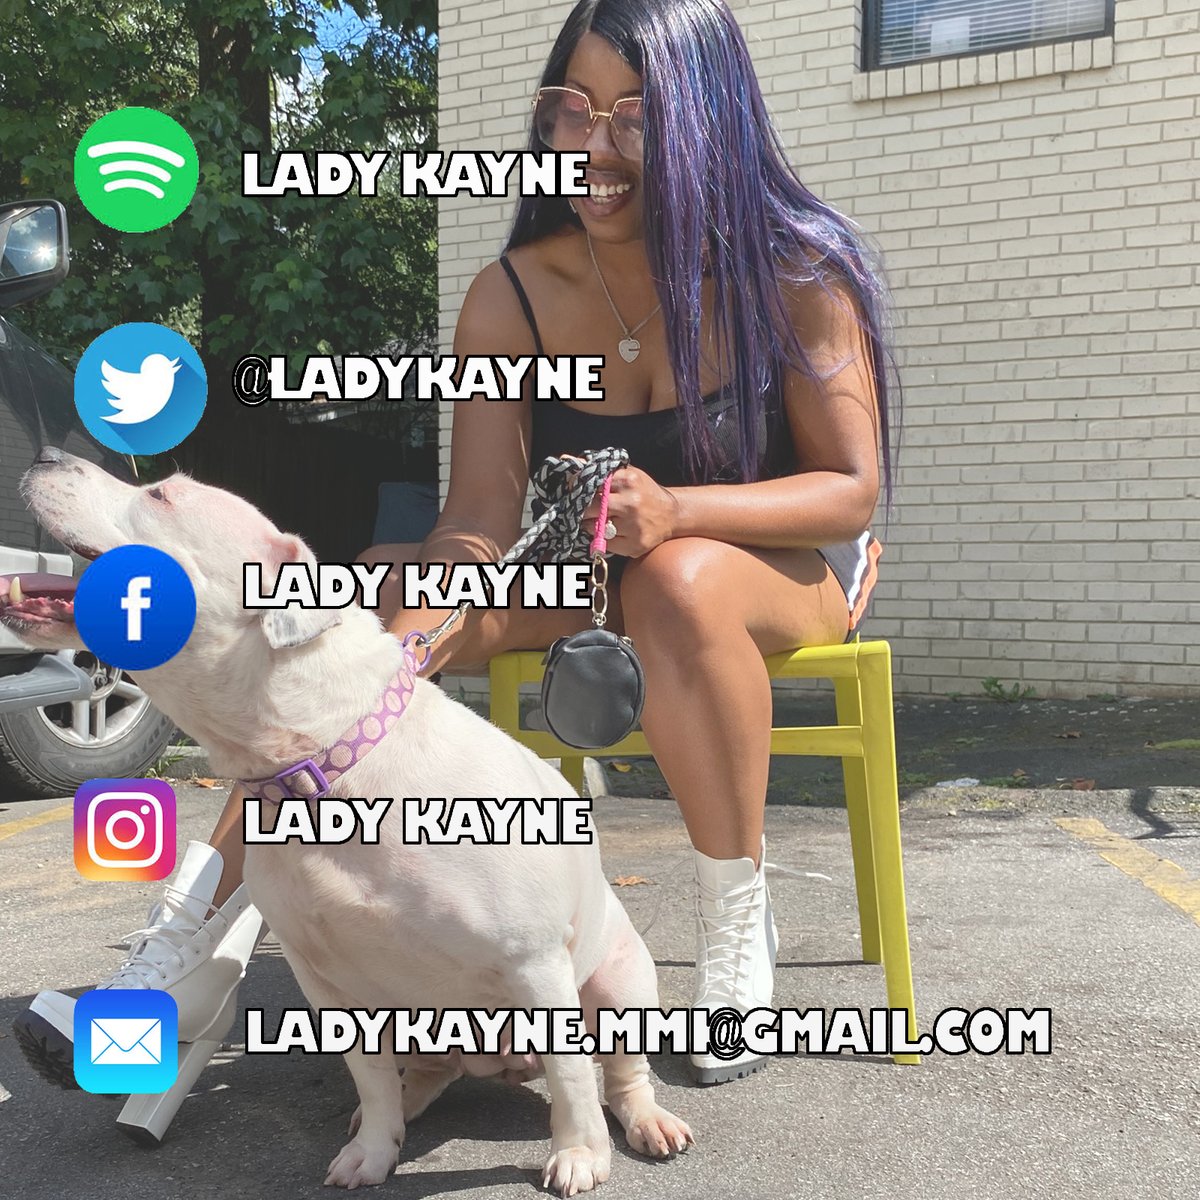 #Lockin w/ the #GrindQueen ⚙️👑 @LadyKayne  & become a part of #KayneGang! 🌸
🌺🌸💕
linktr.ee/ladykayne
•
•
•
#LadyKayne #HAVNIT #StudioLove #ILike #LookSweet #indieartist #femalerapper #spotify #lotp